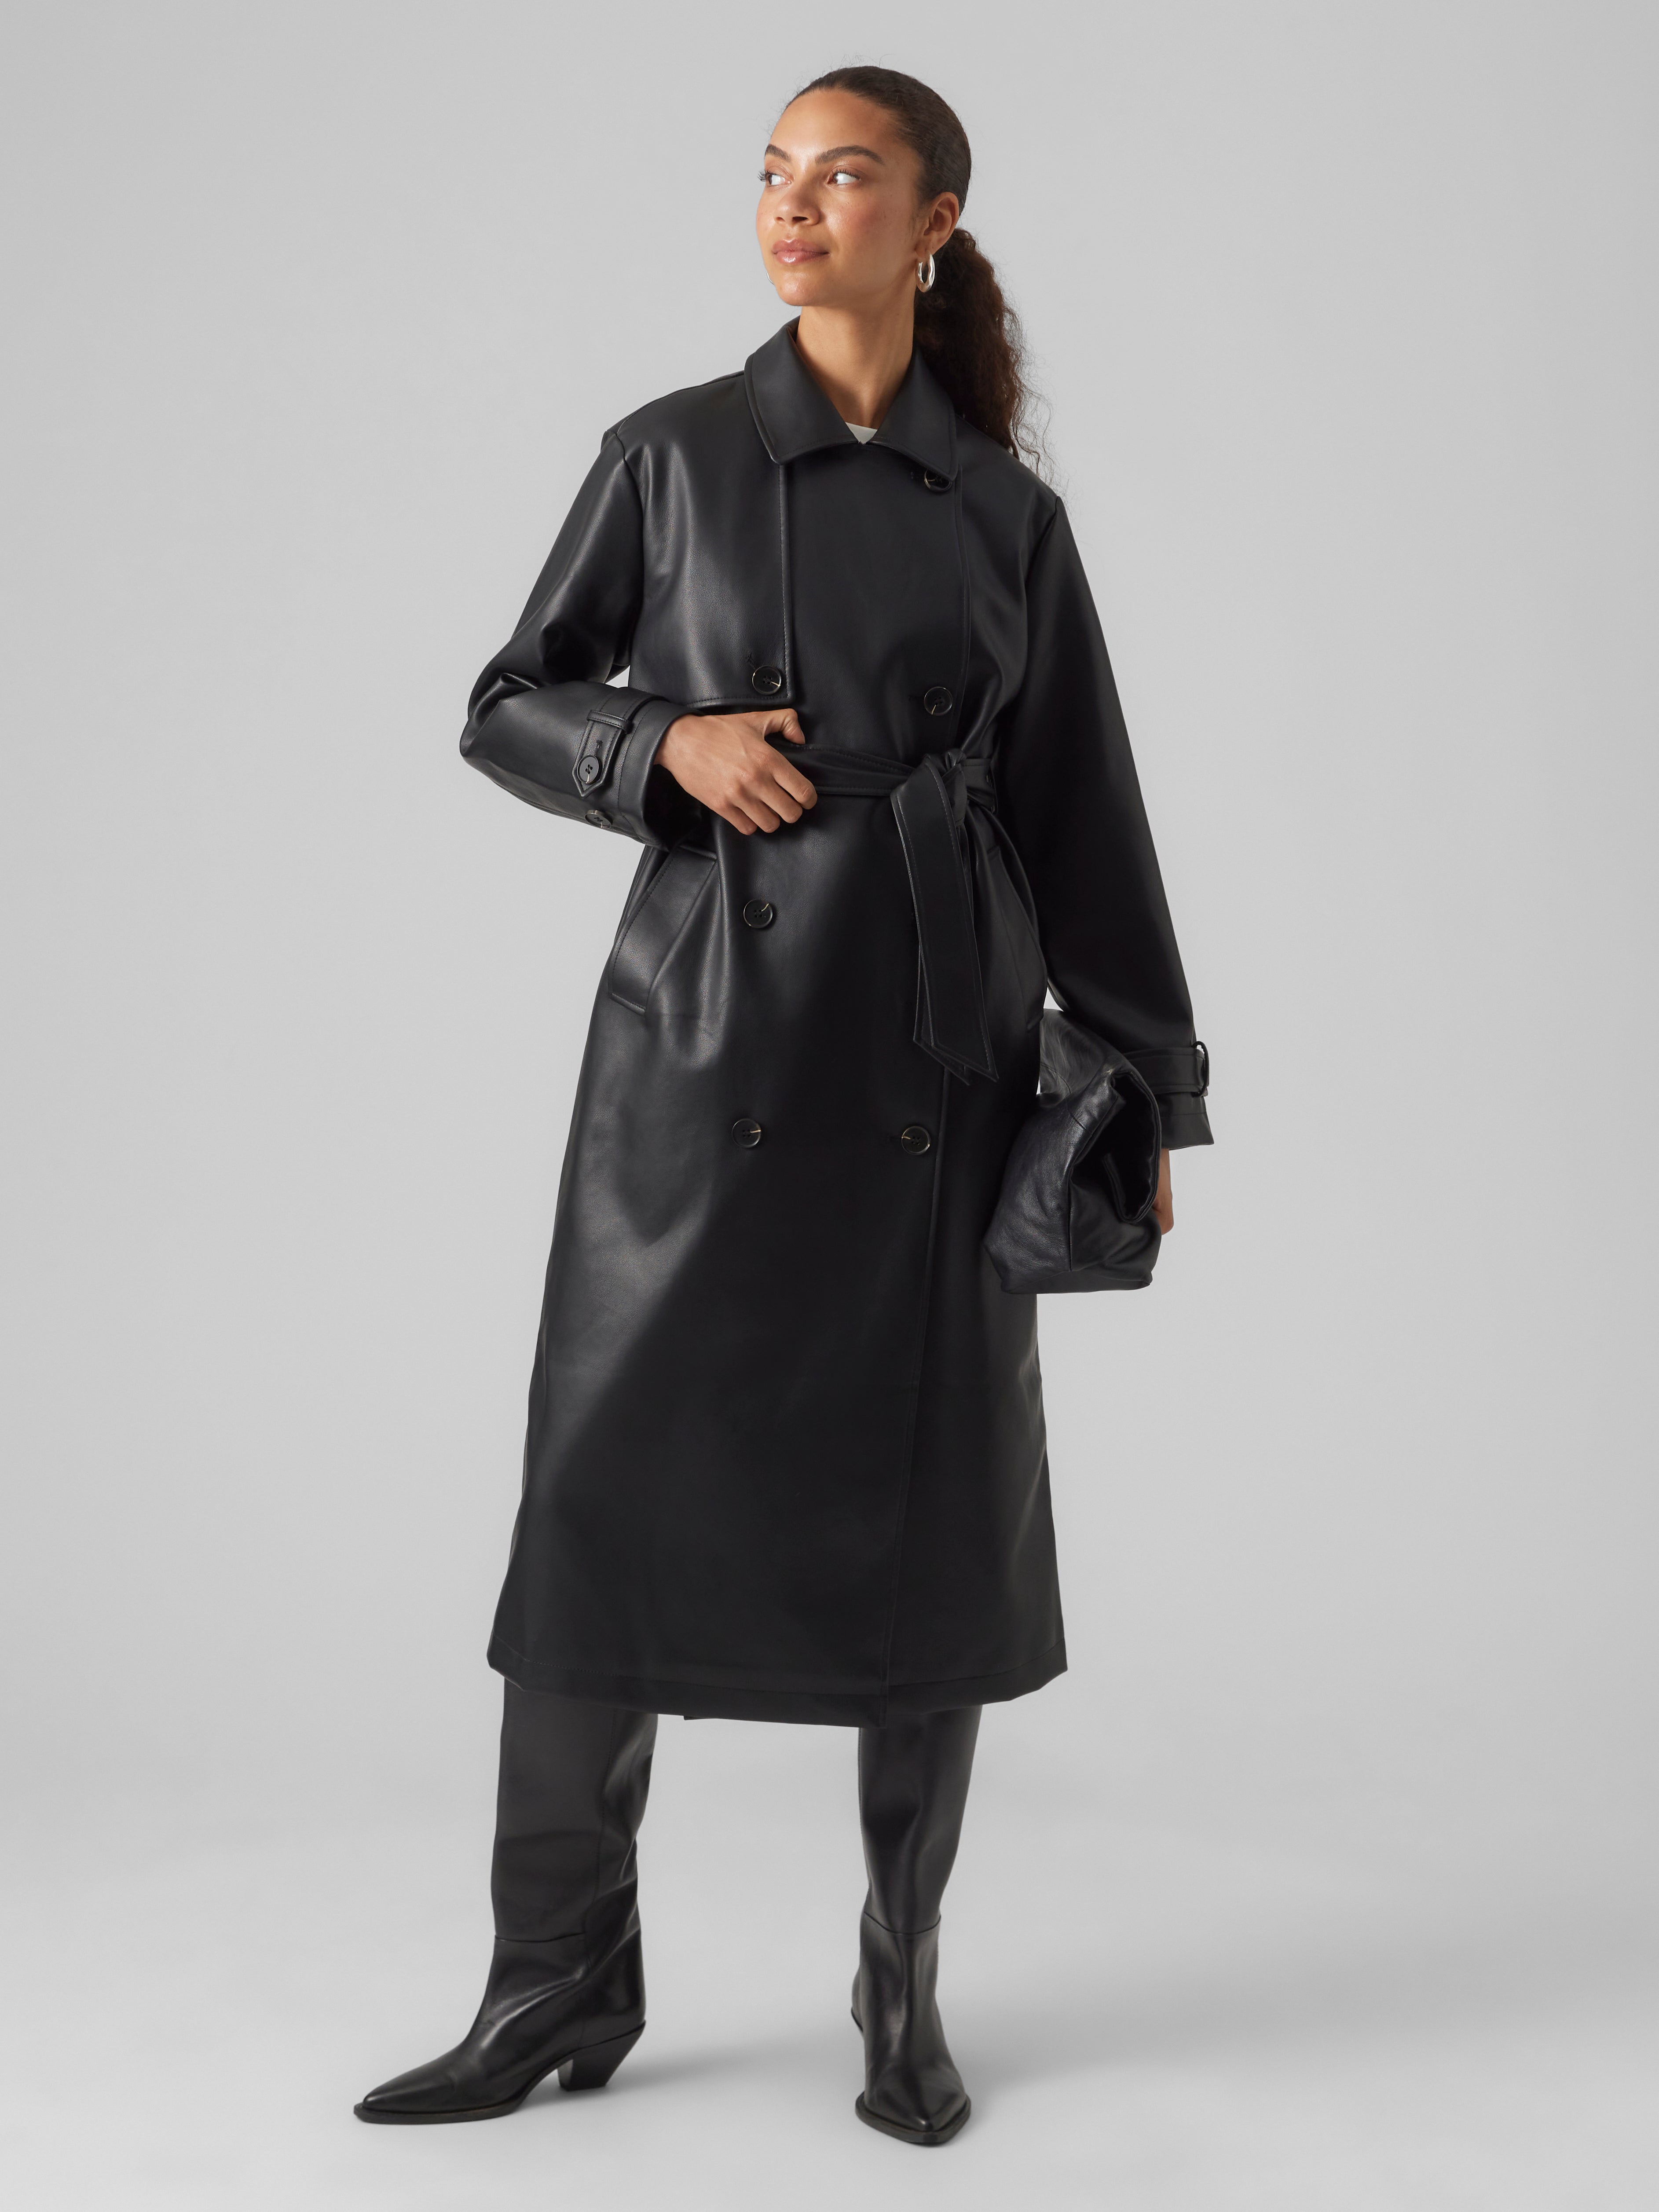 VMALMA Coat Black Moda® | Vero 